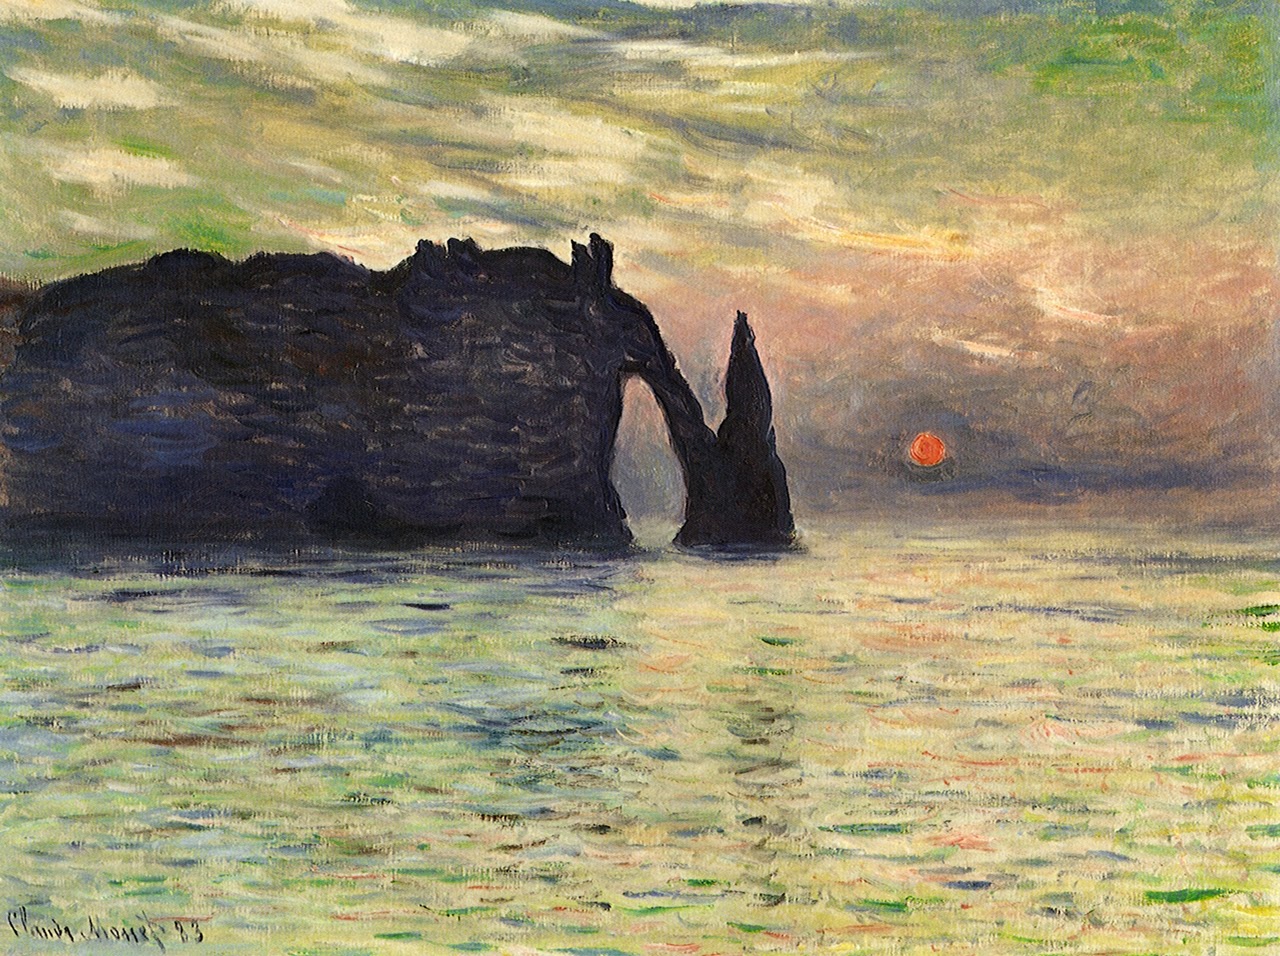 Claude+Monet-1840-1926 (490).jpg